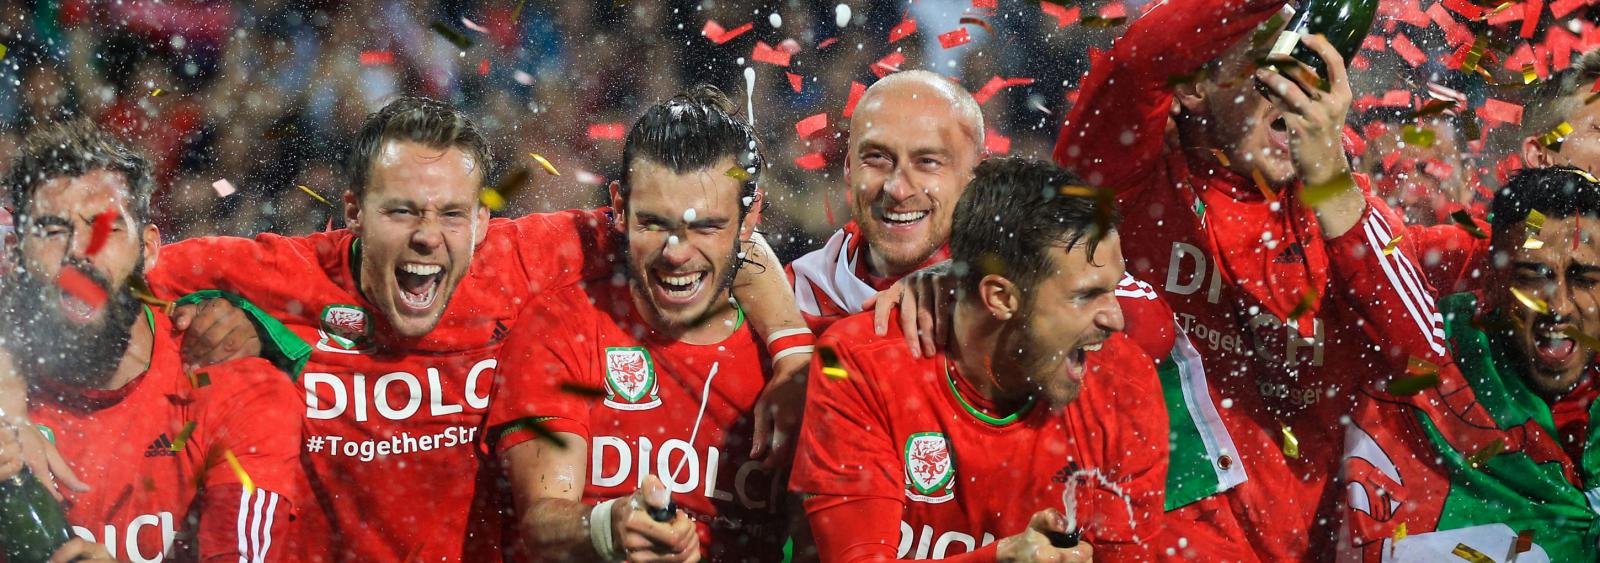 Wales vs Slovakia: EURO 2016 Group B Preview & Prediction